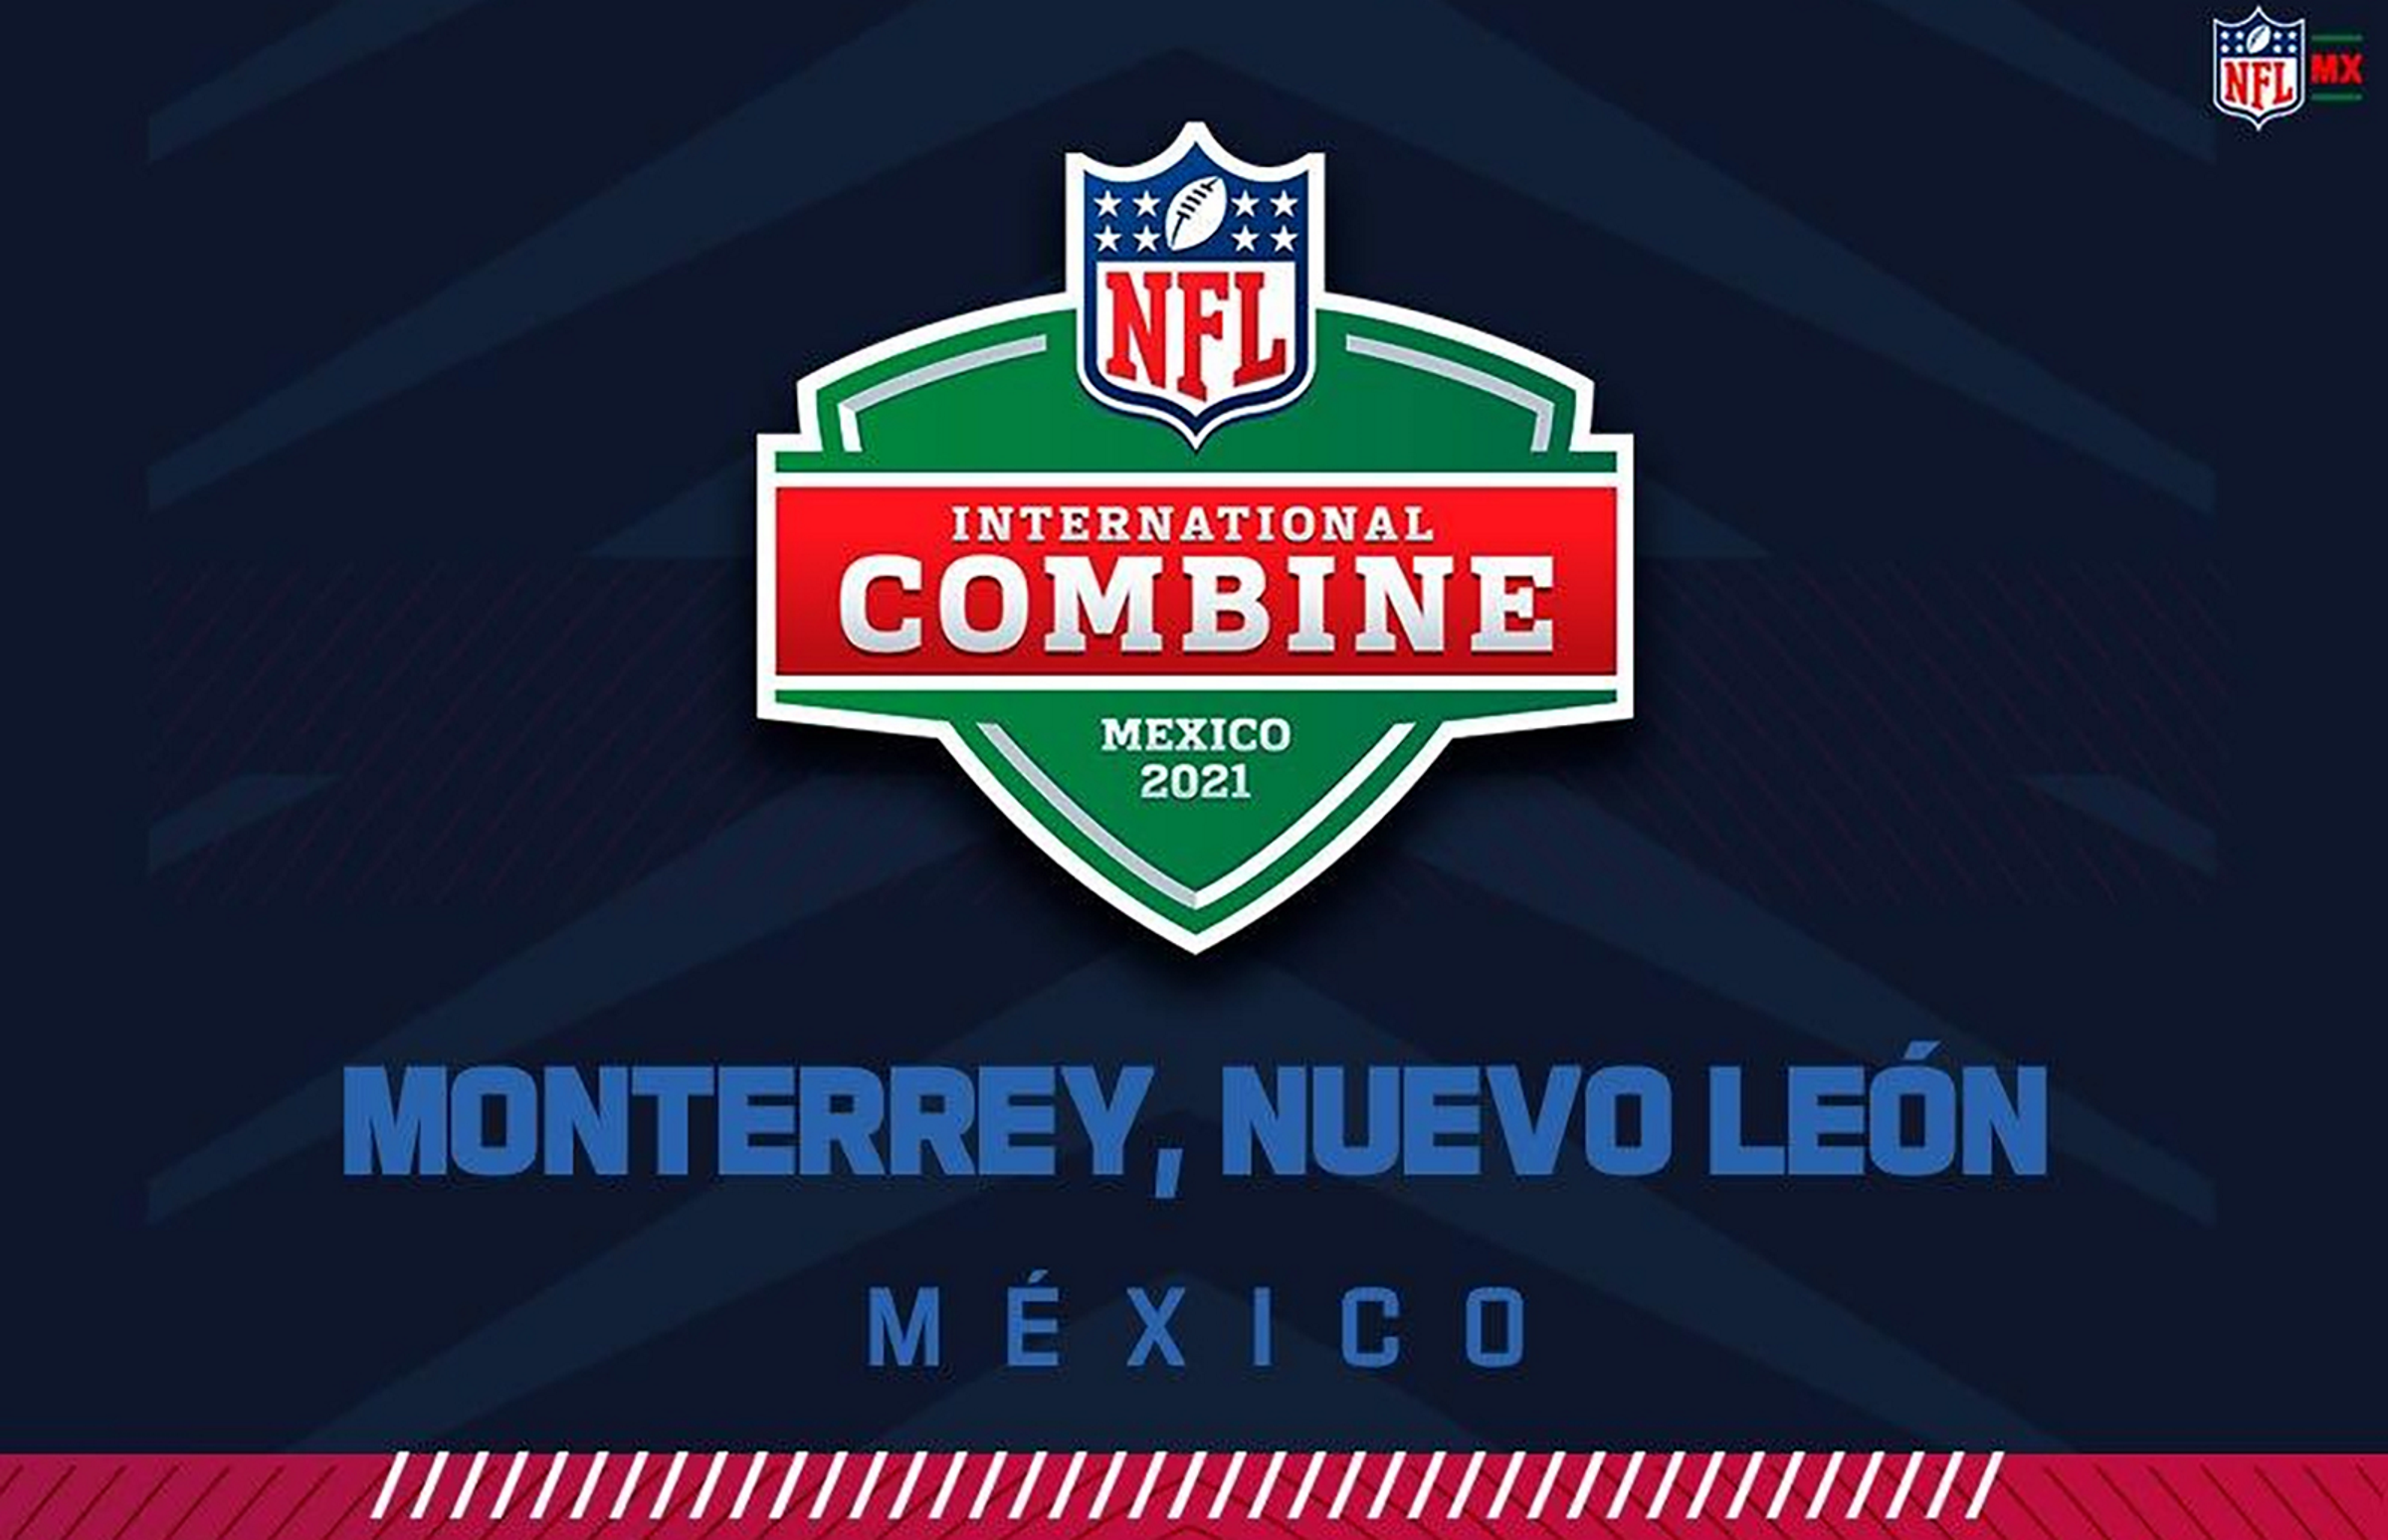 Second NFL International Combine set for Monterrey, Mexico